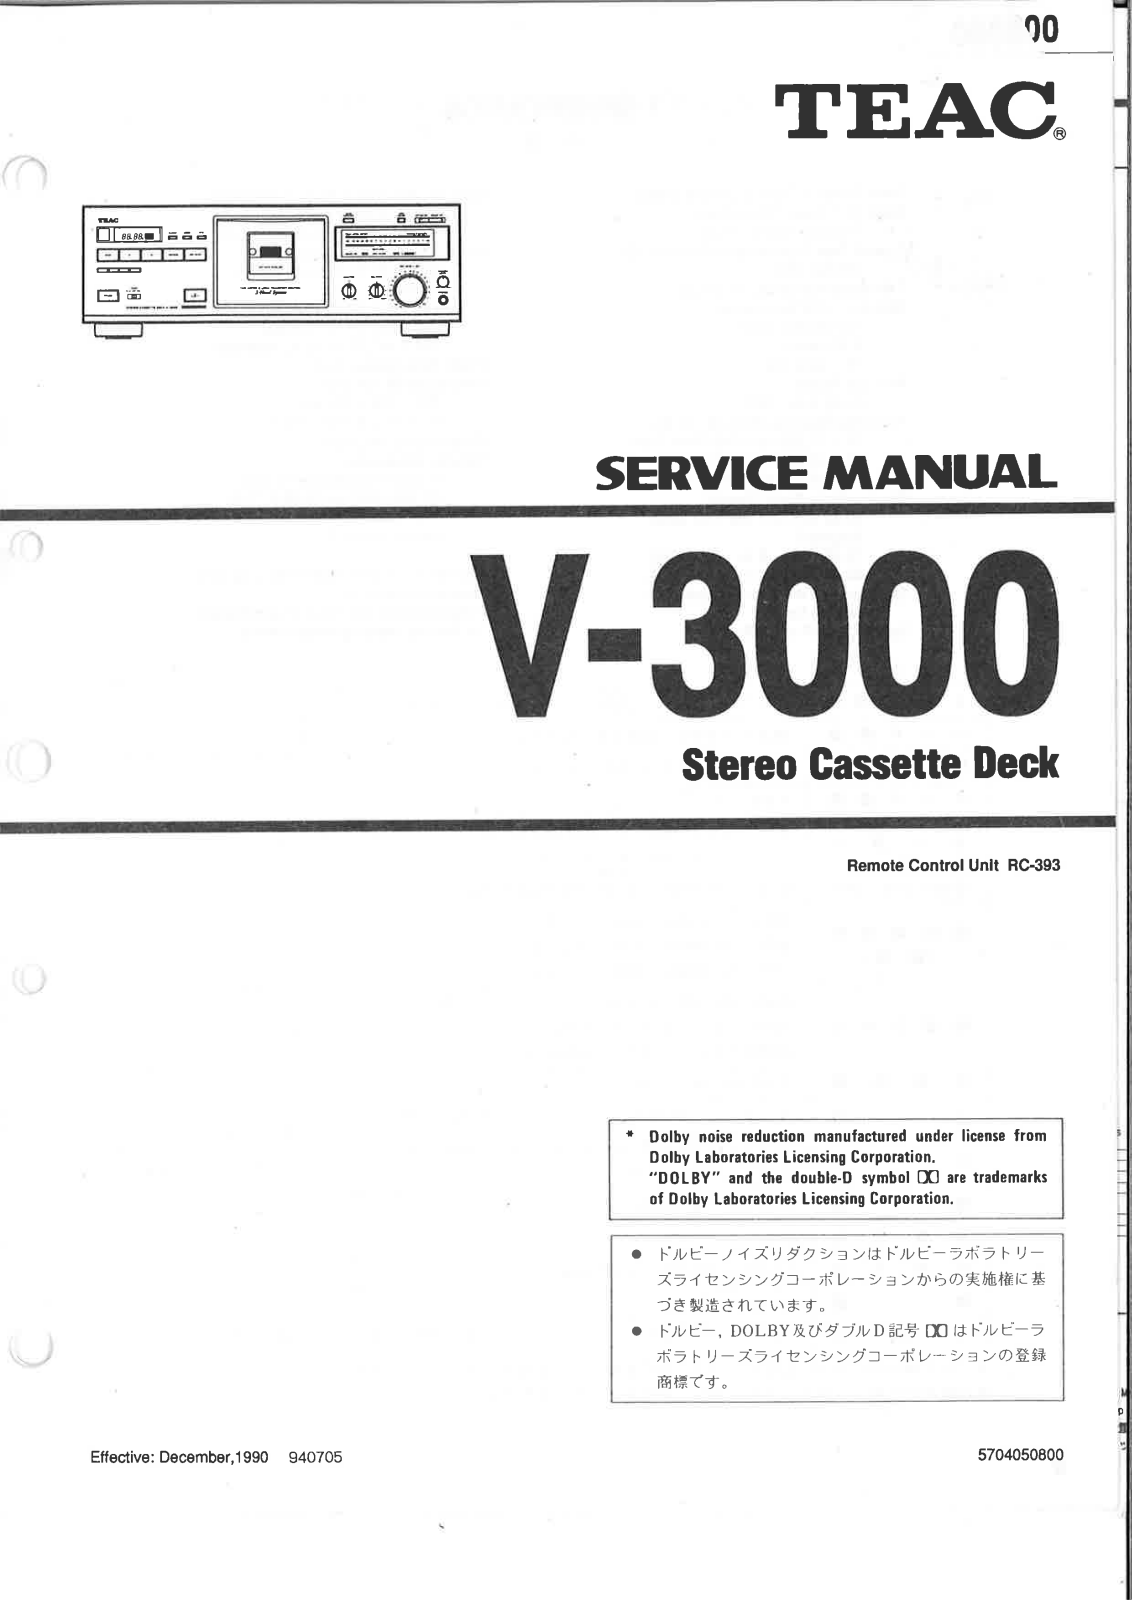 Teac V-3000 Service Manual